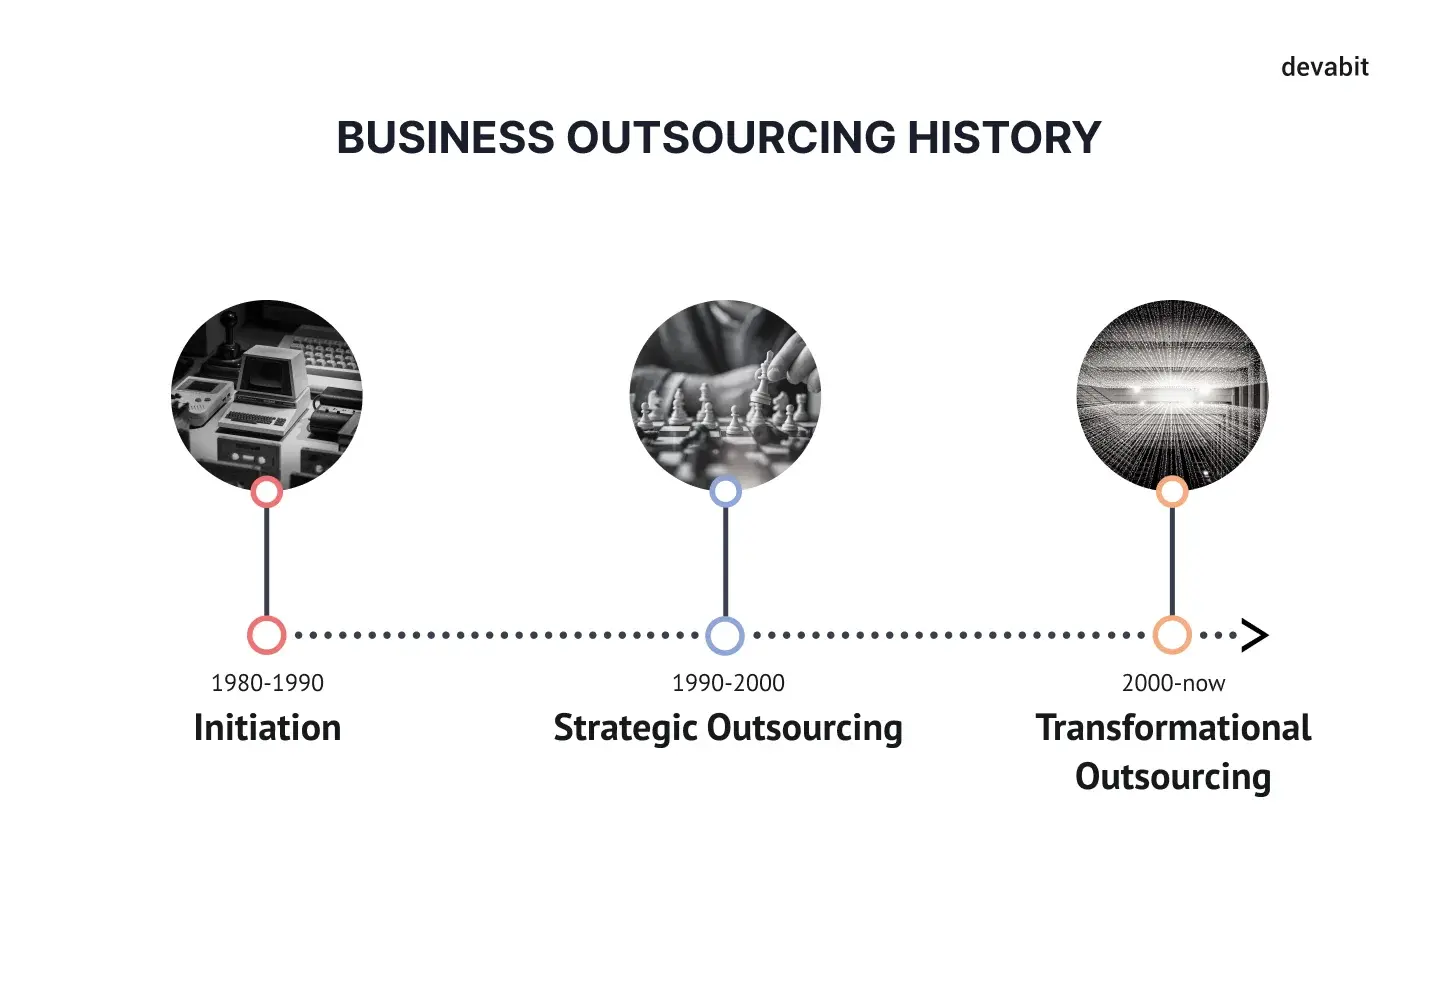 Software Development Outsourcing History by devabit